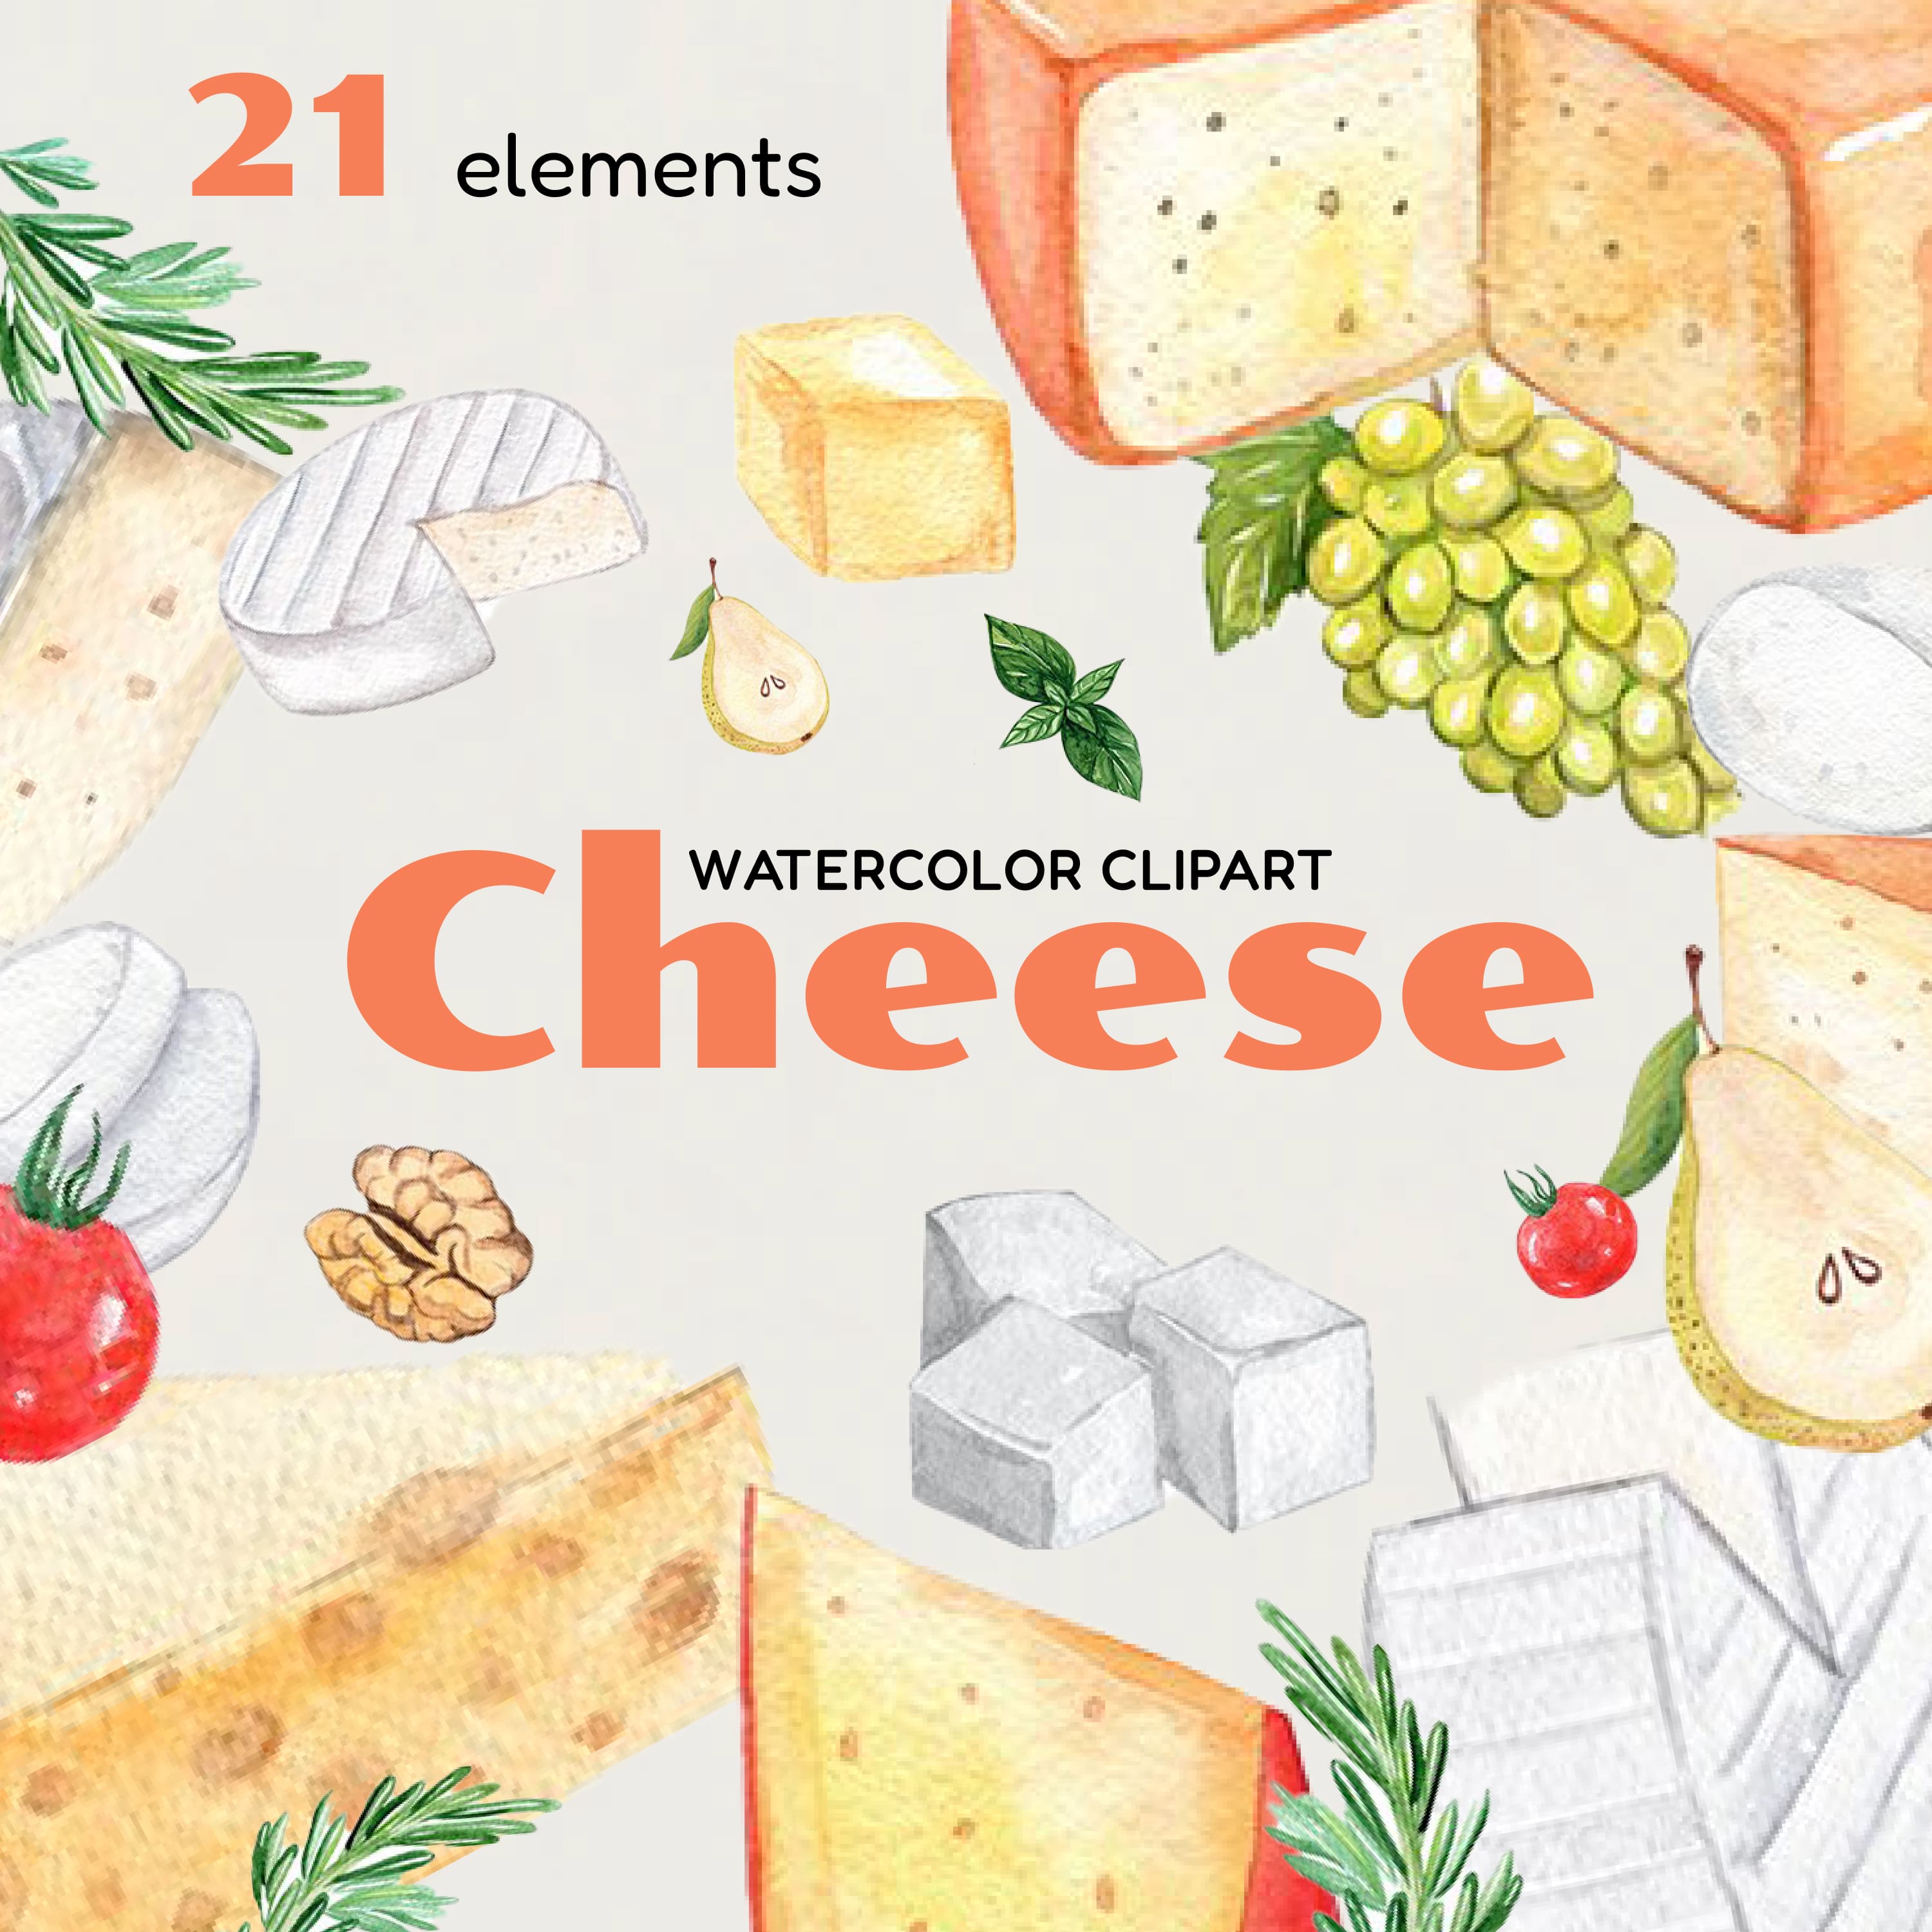 cheesemaking clipart